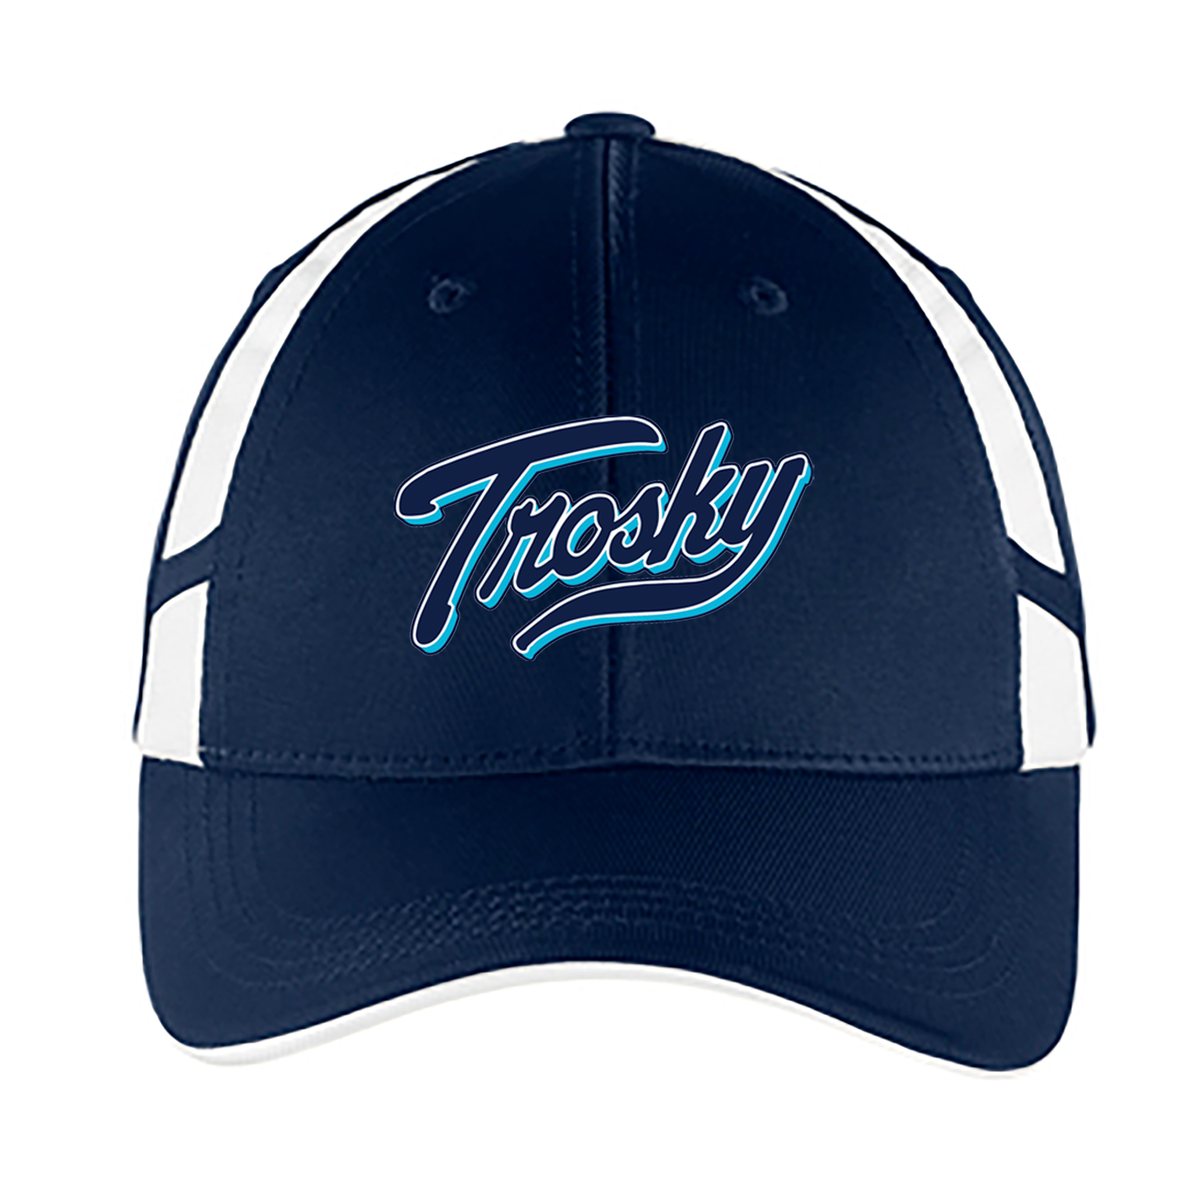 Trosky Baseball Dry Zone® Mesh Inset Cap